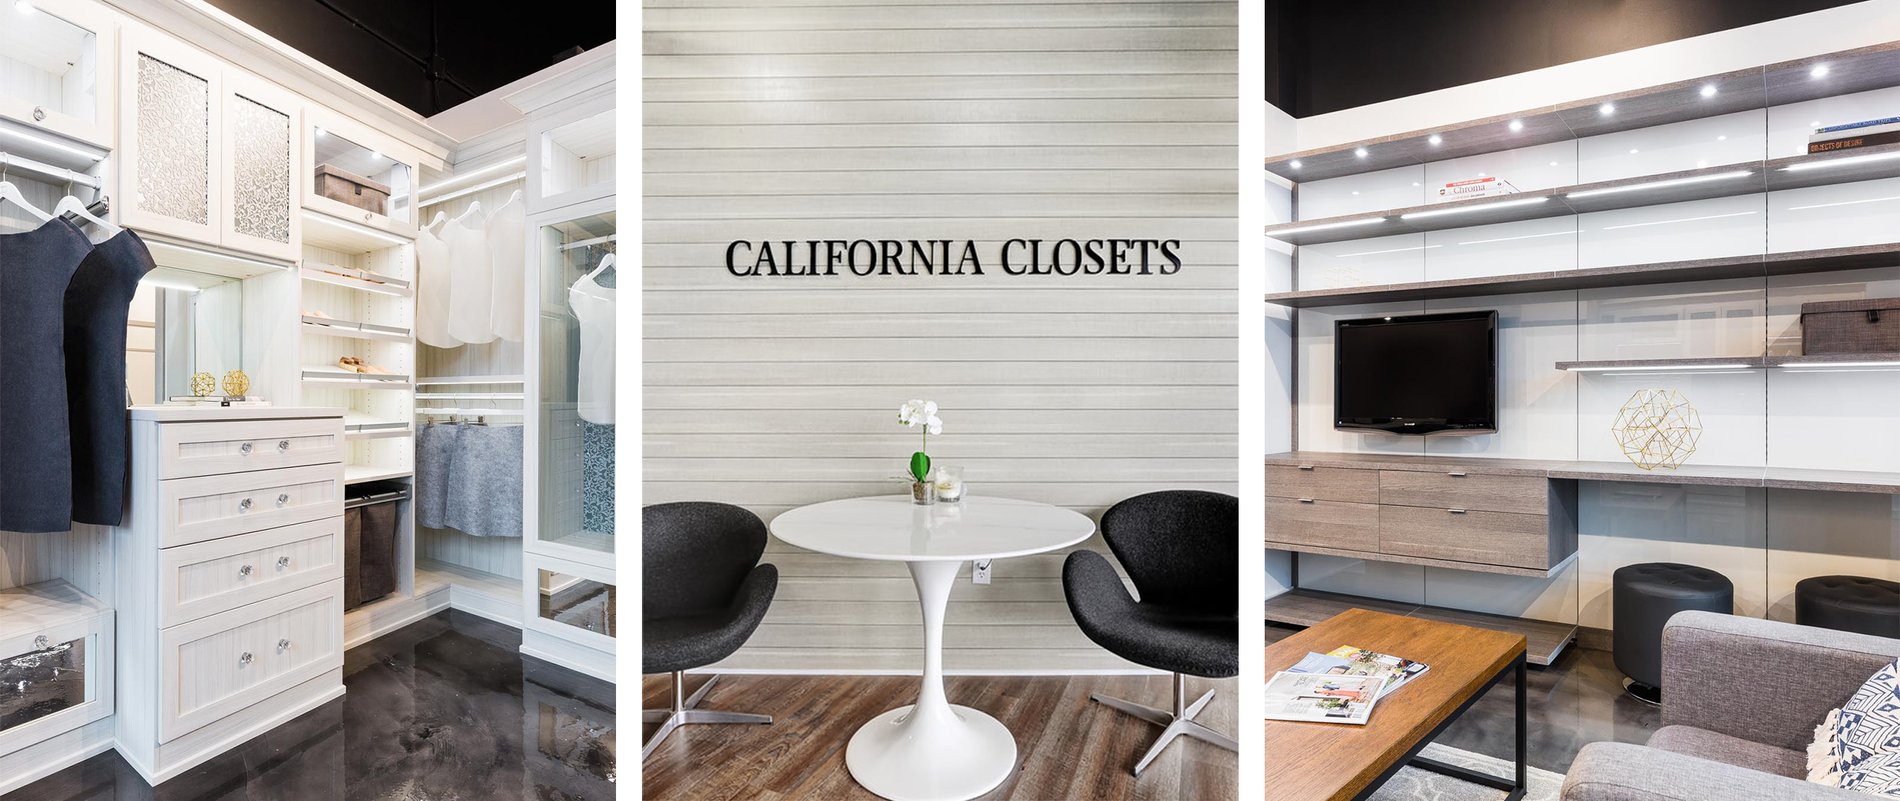 Custom Closets and Closet Systems Burnaby, British Columbia - California Closets